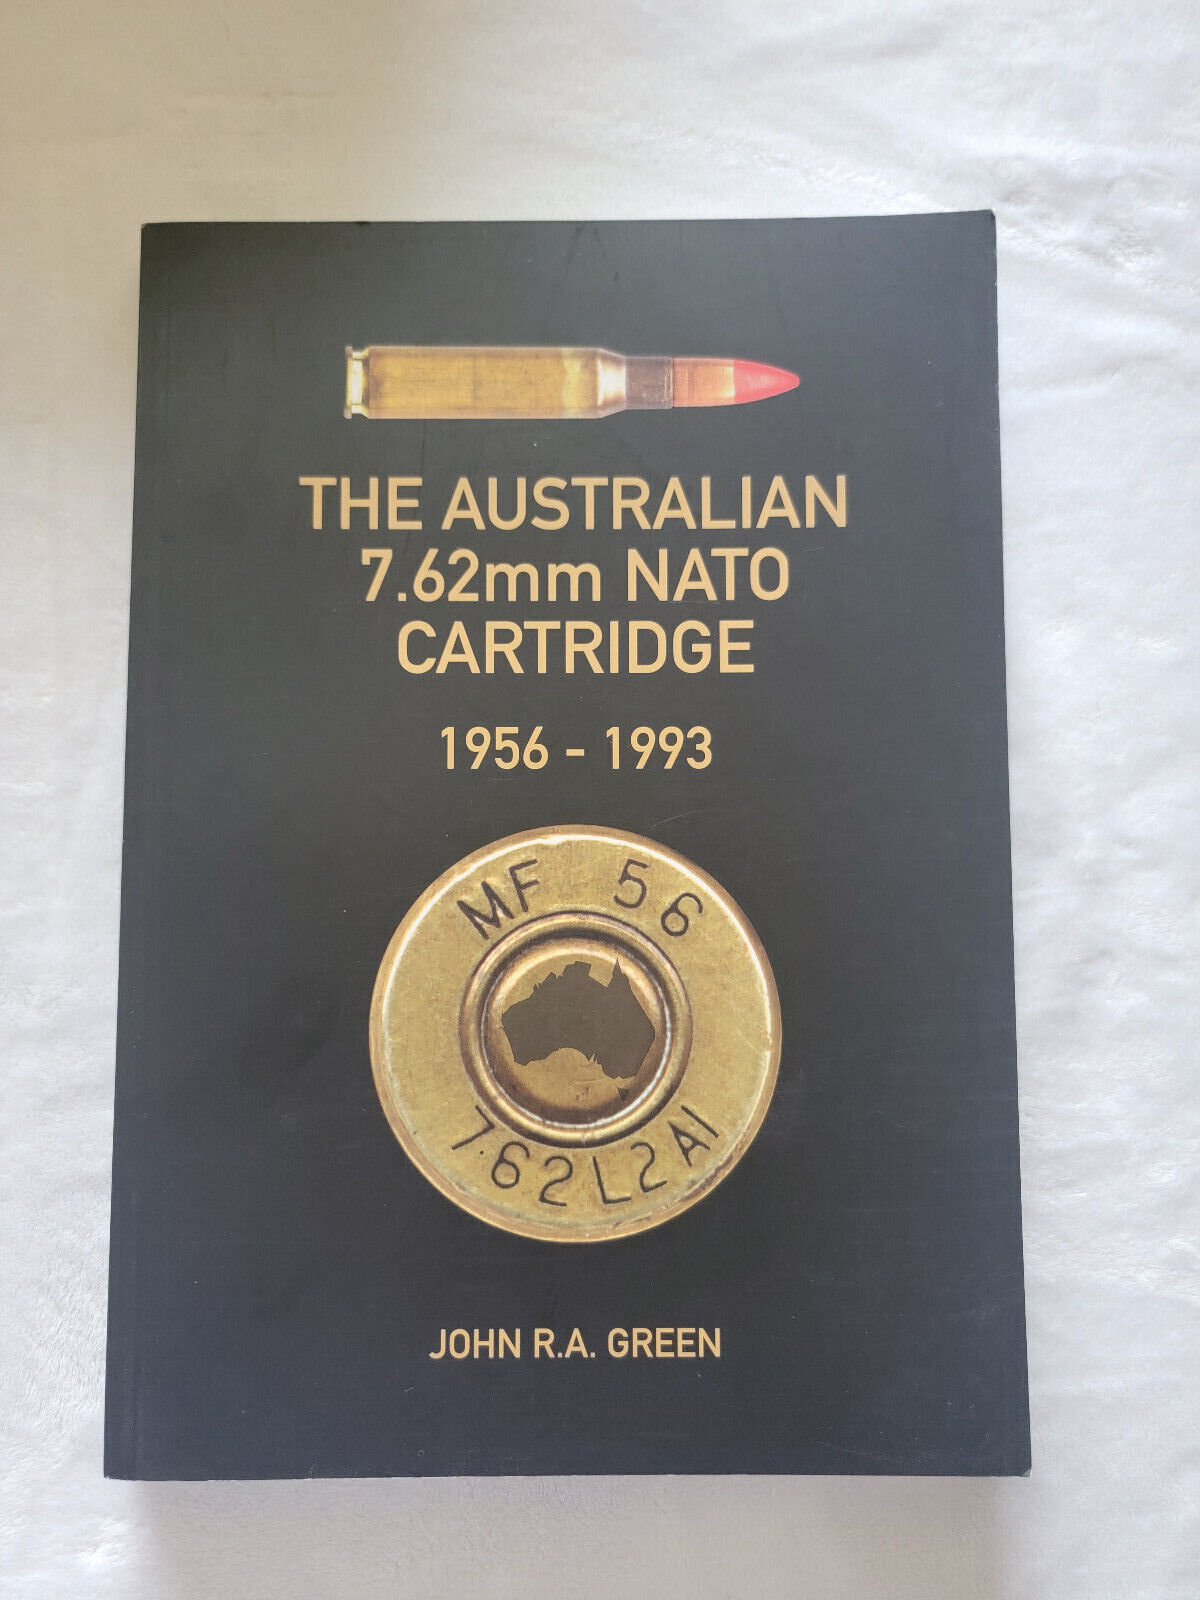 AUSTRALIAN 7.62MM NATO CARTRIDGE 1956-1993 by John R.A. Green - Signed 1st Ed